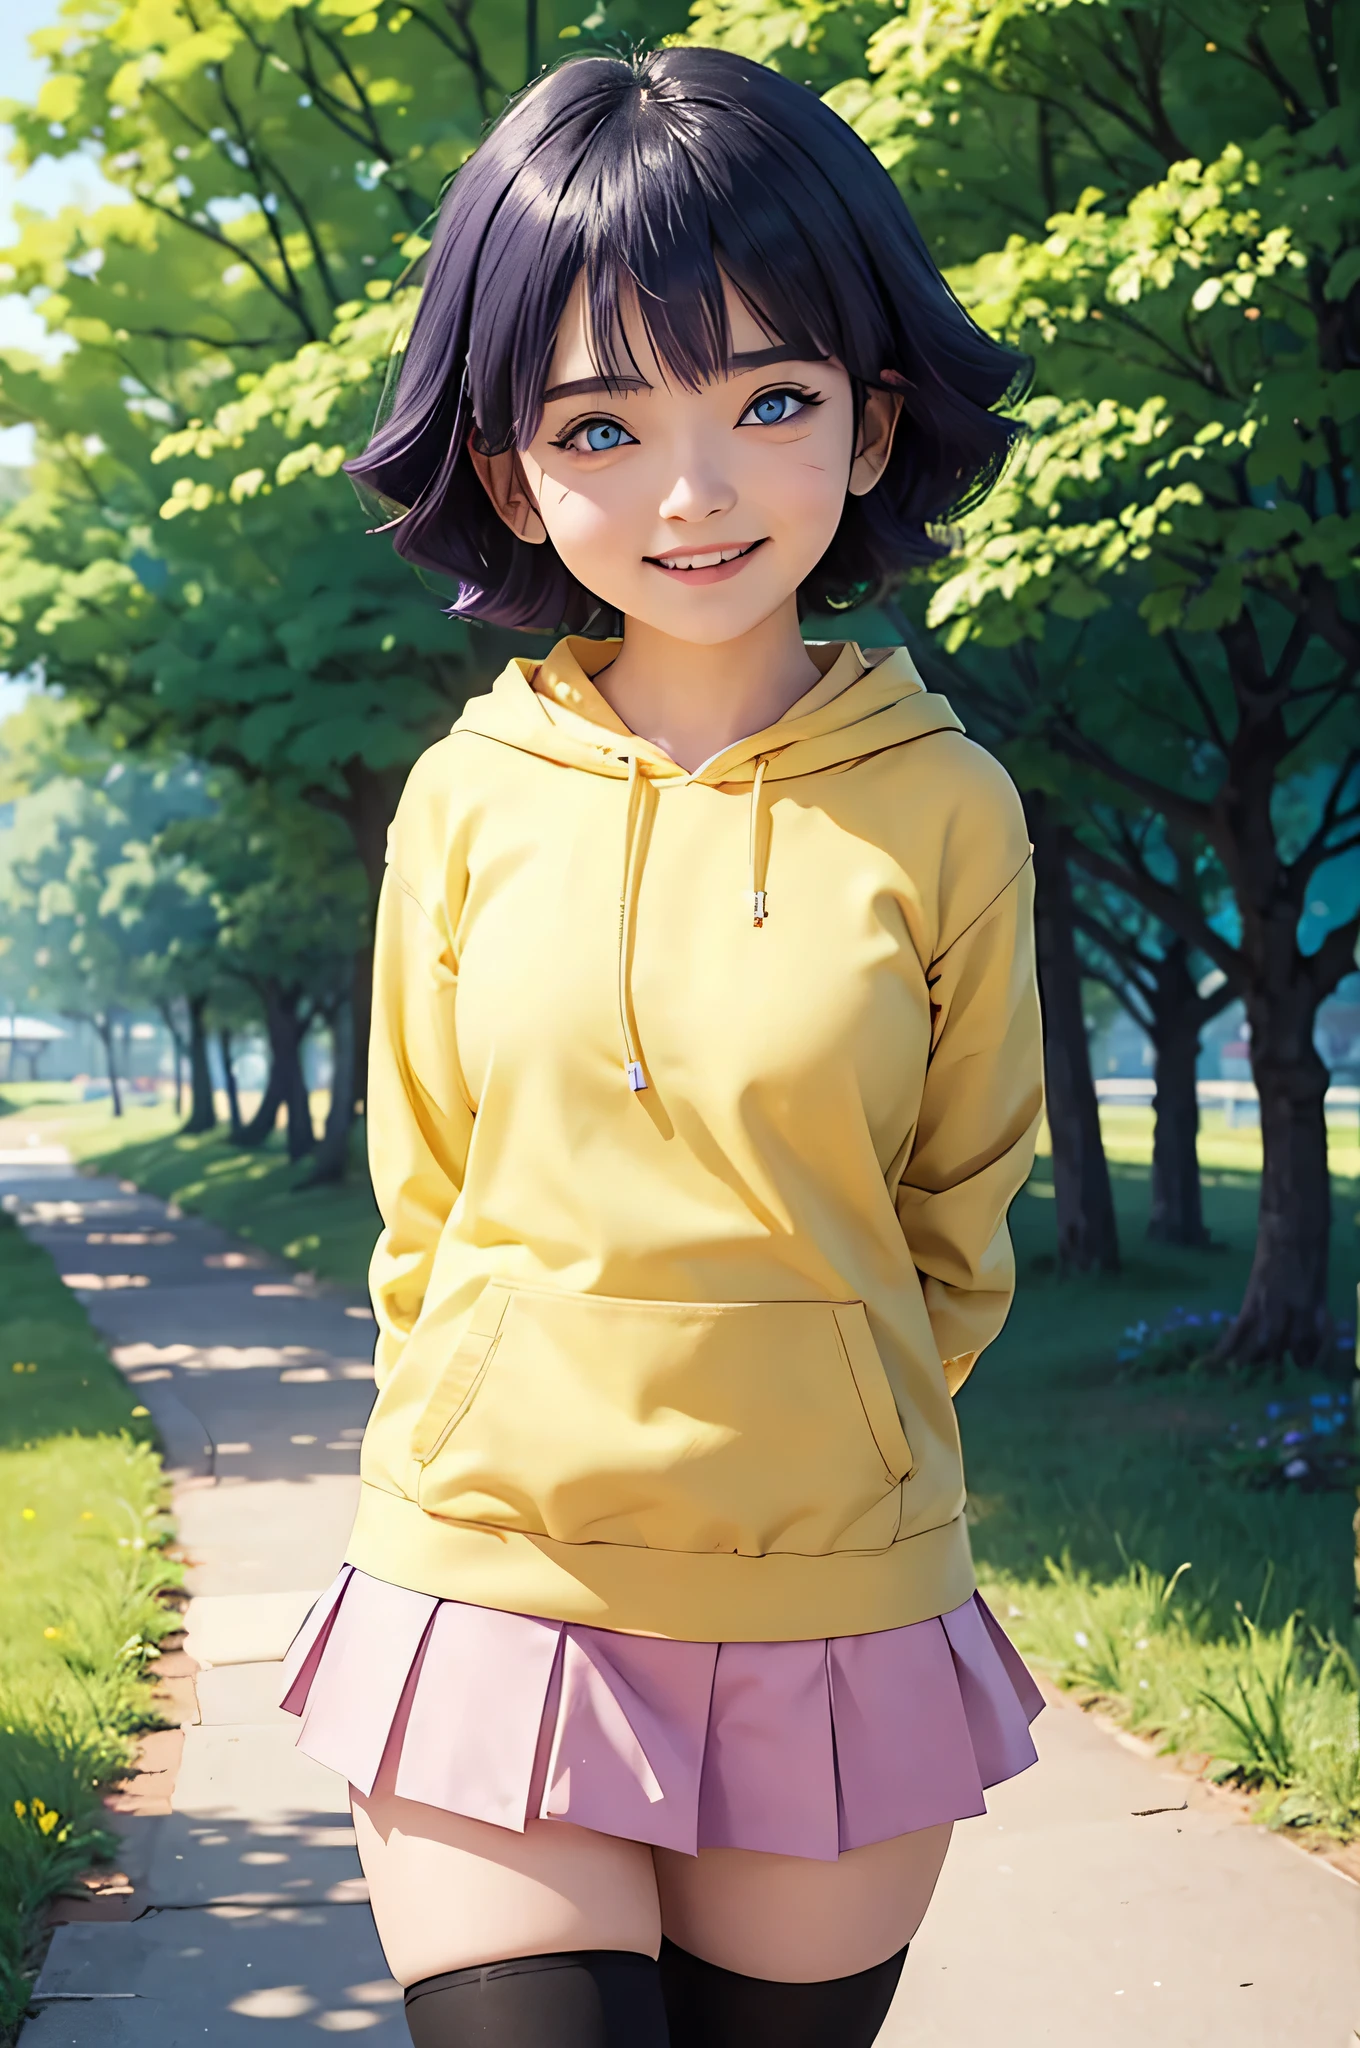 1 garota, Himawari anime naruto shipudden, cabelo curto , Cabelo roxo, olhos azuis, lindo, Roupas amarelas , sorriso, realista clothes, roupas detalhadas, Fundo da cidade, ultra detalhe, realista